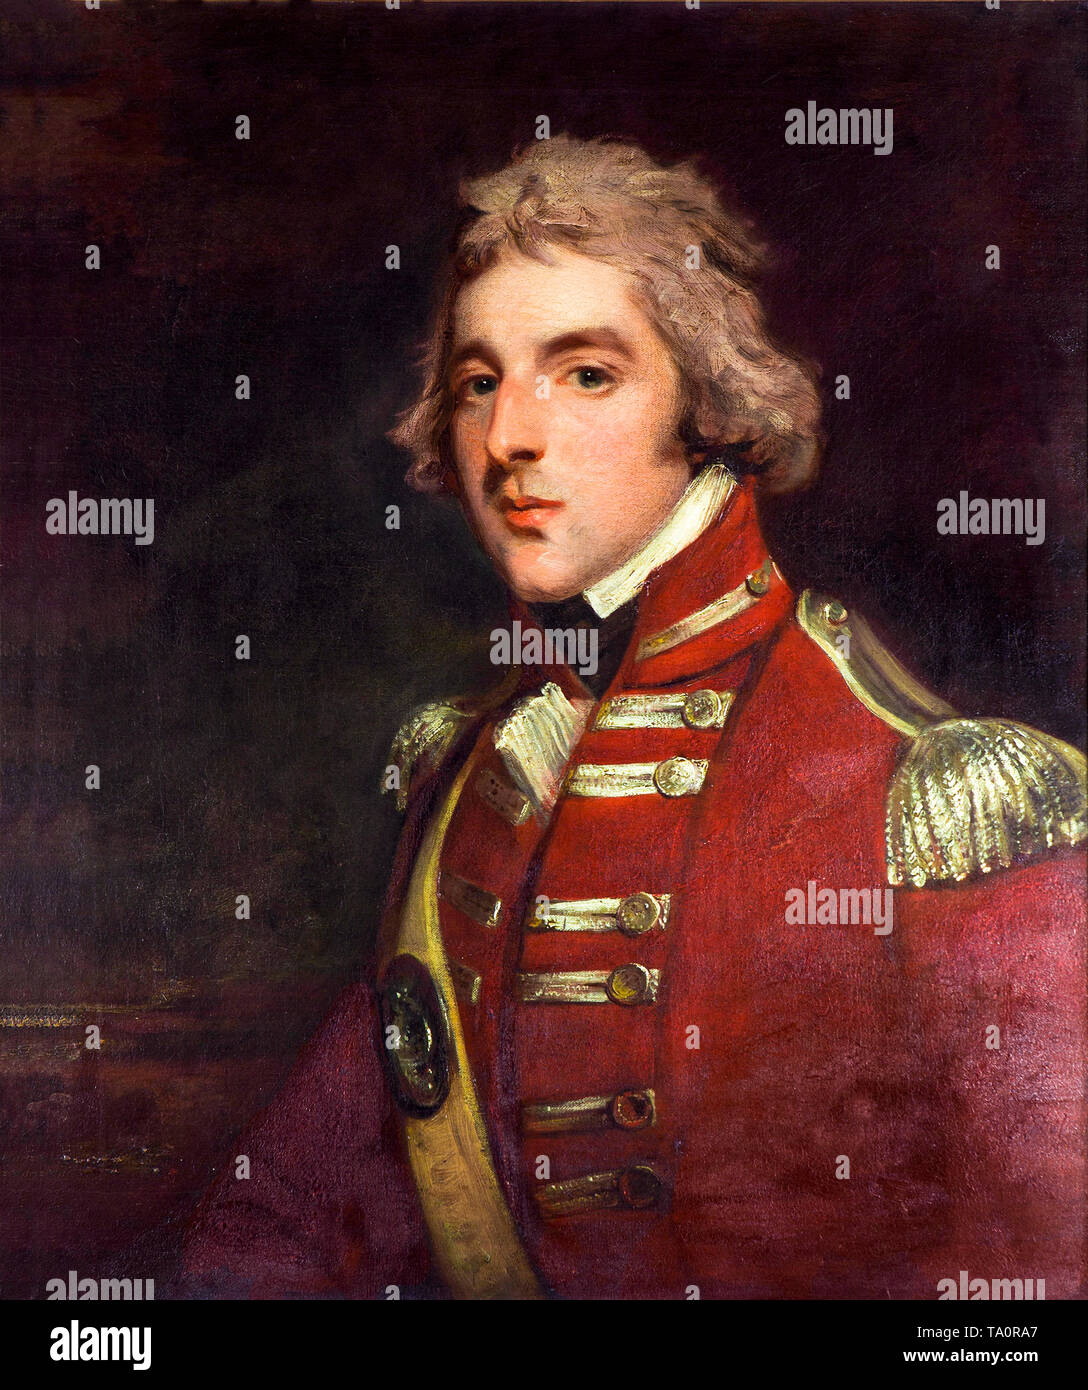 John Hoppner, Lieutenant Colonel Arthur Wellesley, aged 26, in the 33rd Regiment, portrait painting, c. 1795 Stock Photo